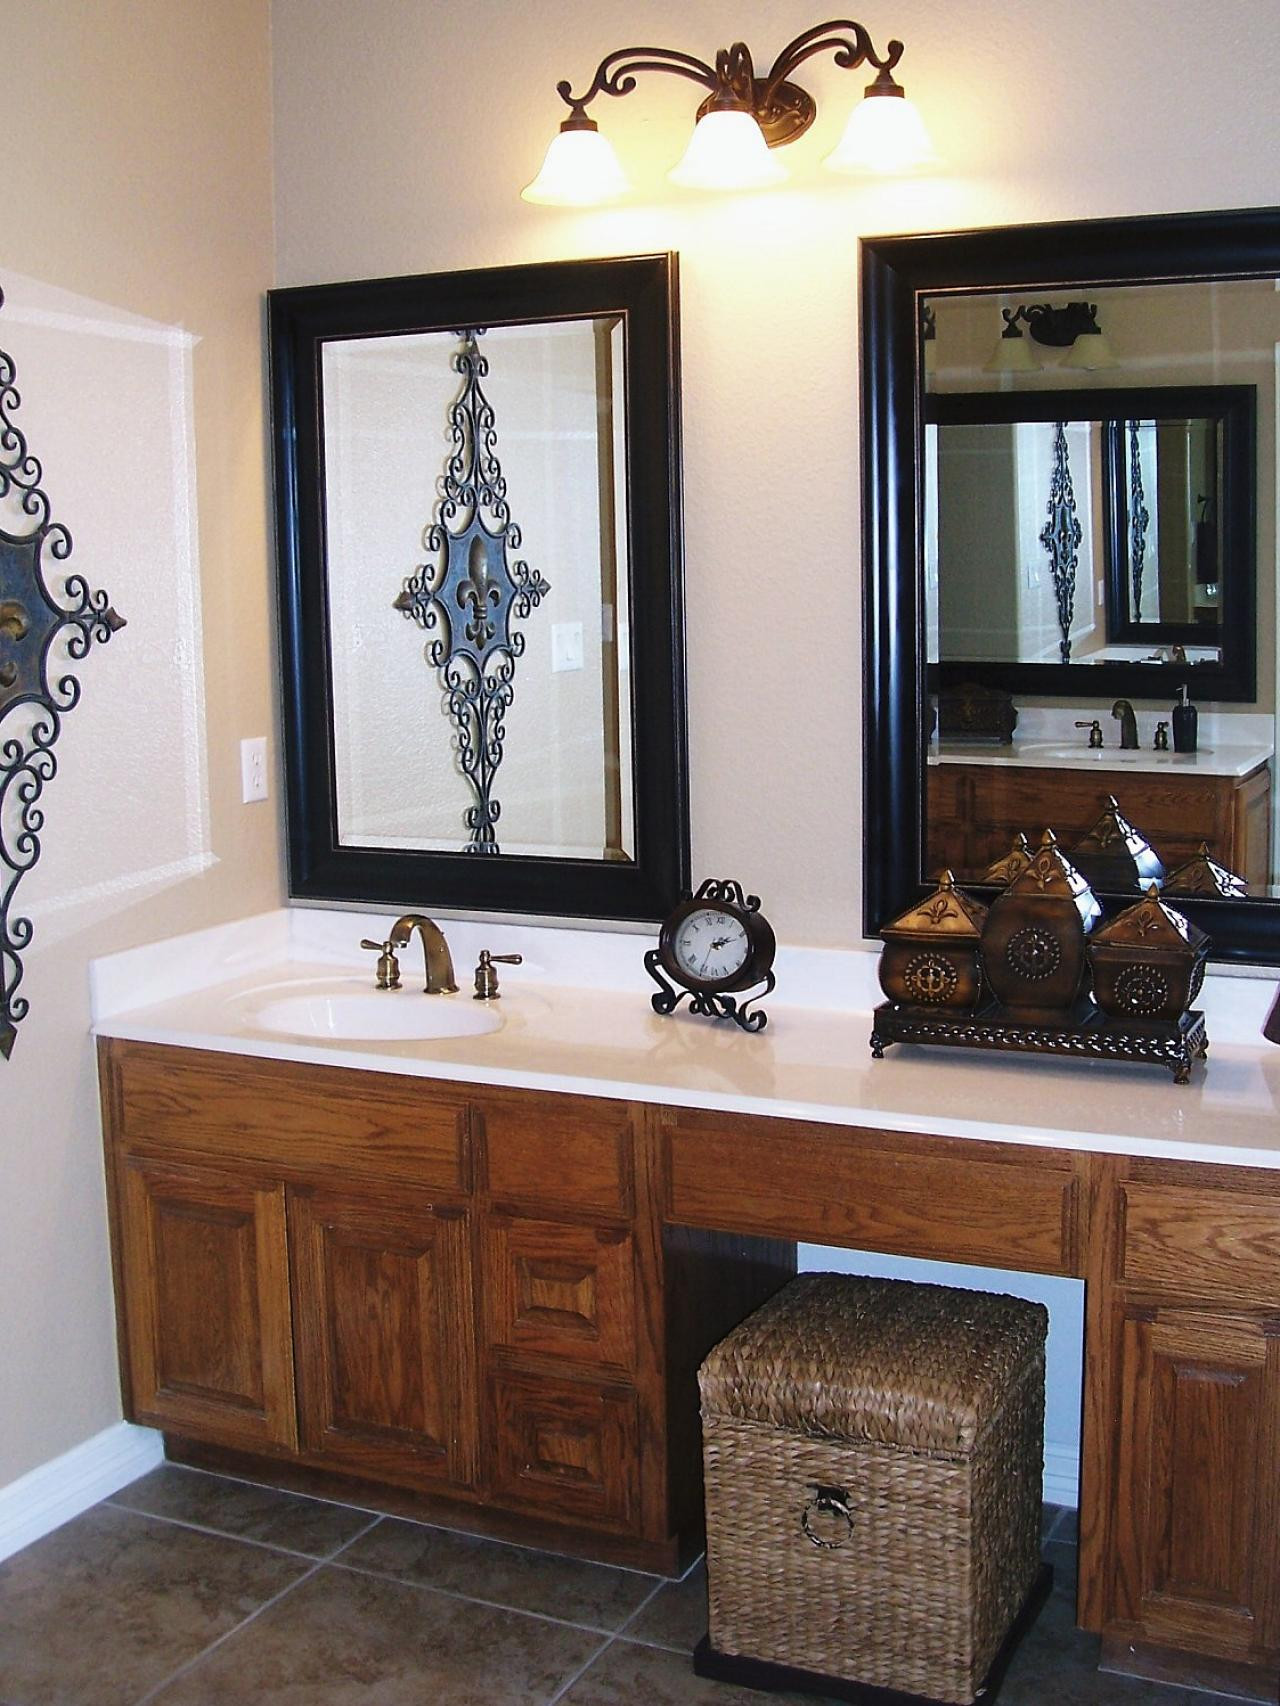 Bathroom Vanity Mirror Lights
 Bathroom Vanity Mirrors for Aesthetics and Functions